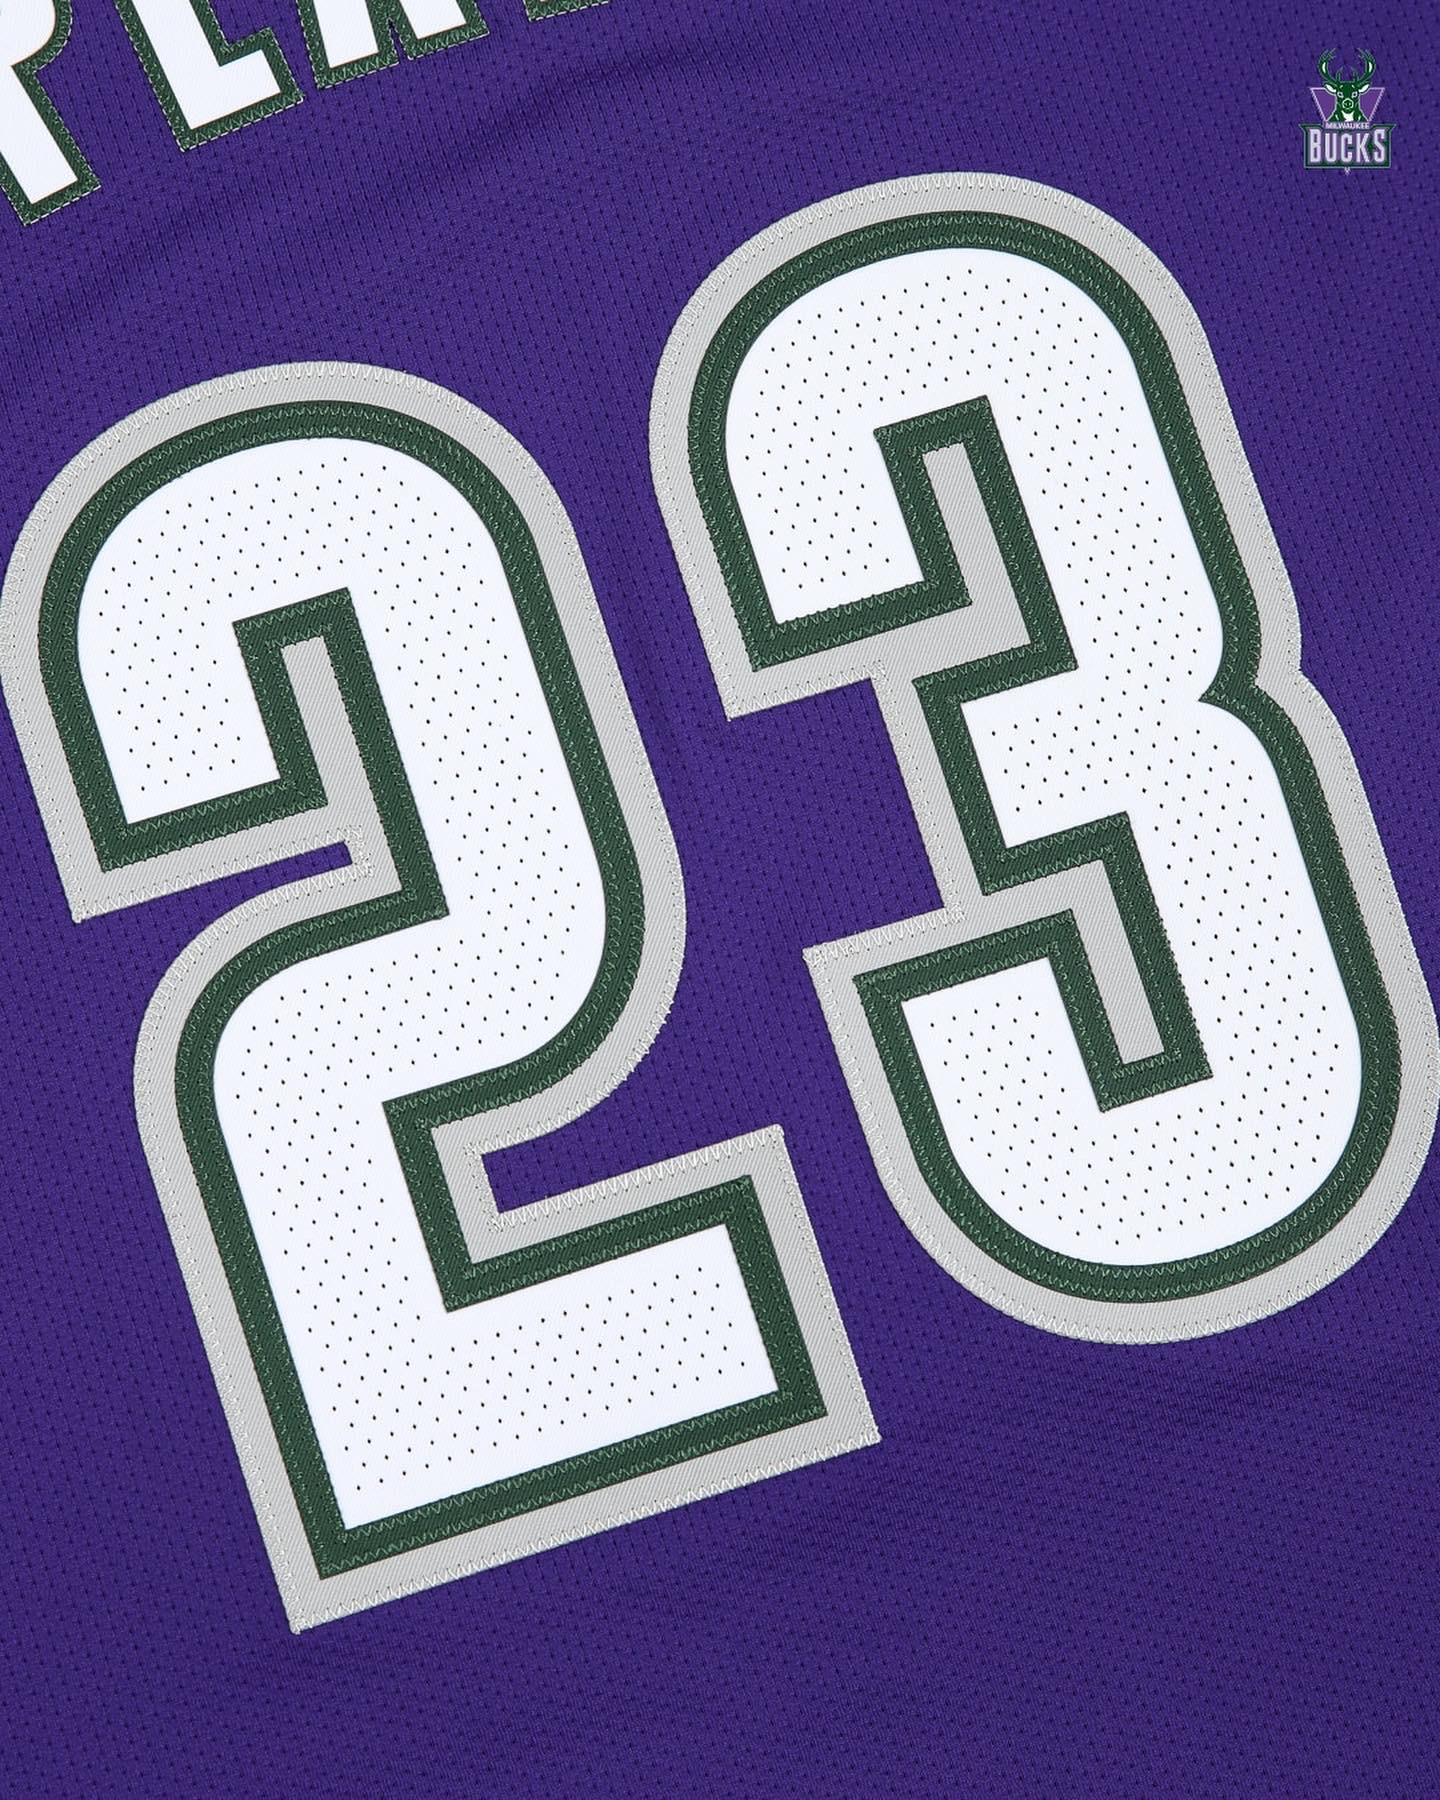 Purple Is Back As Milwaukee Bucks Unveil New 'Light It Up' Classic Edition  Uniform For 2022-23 Season